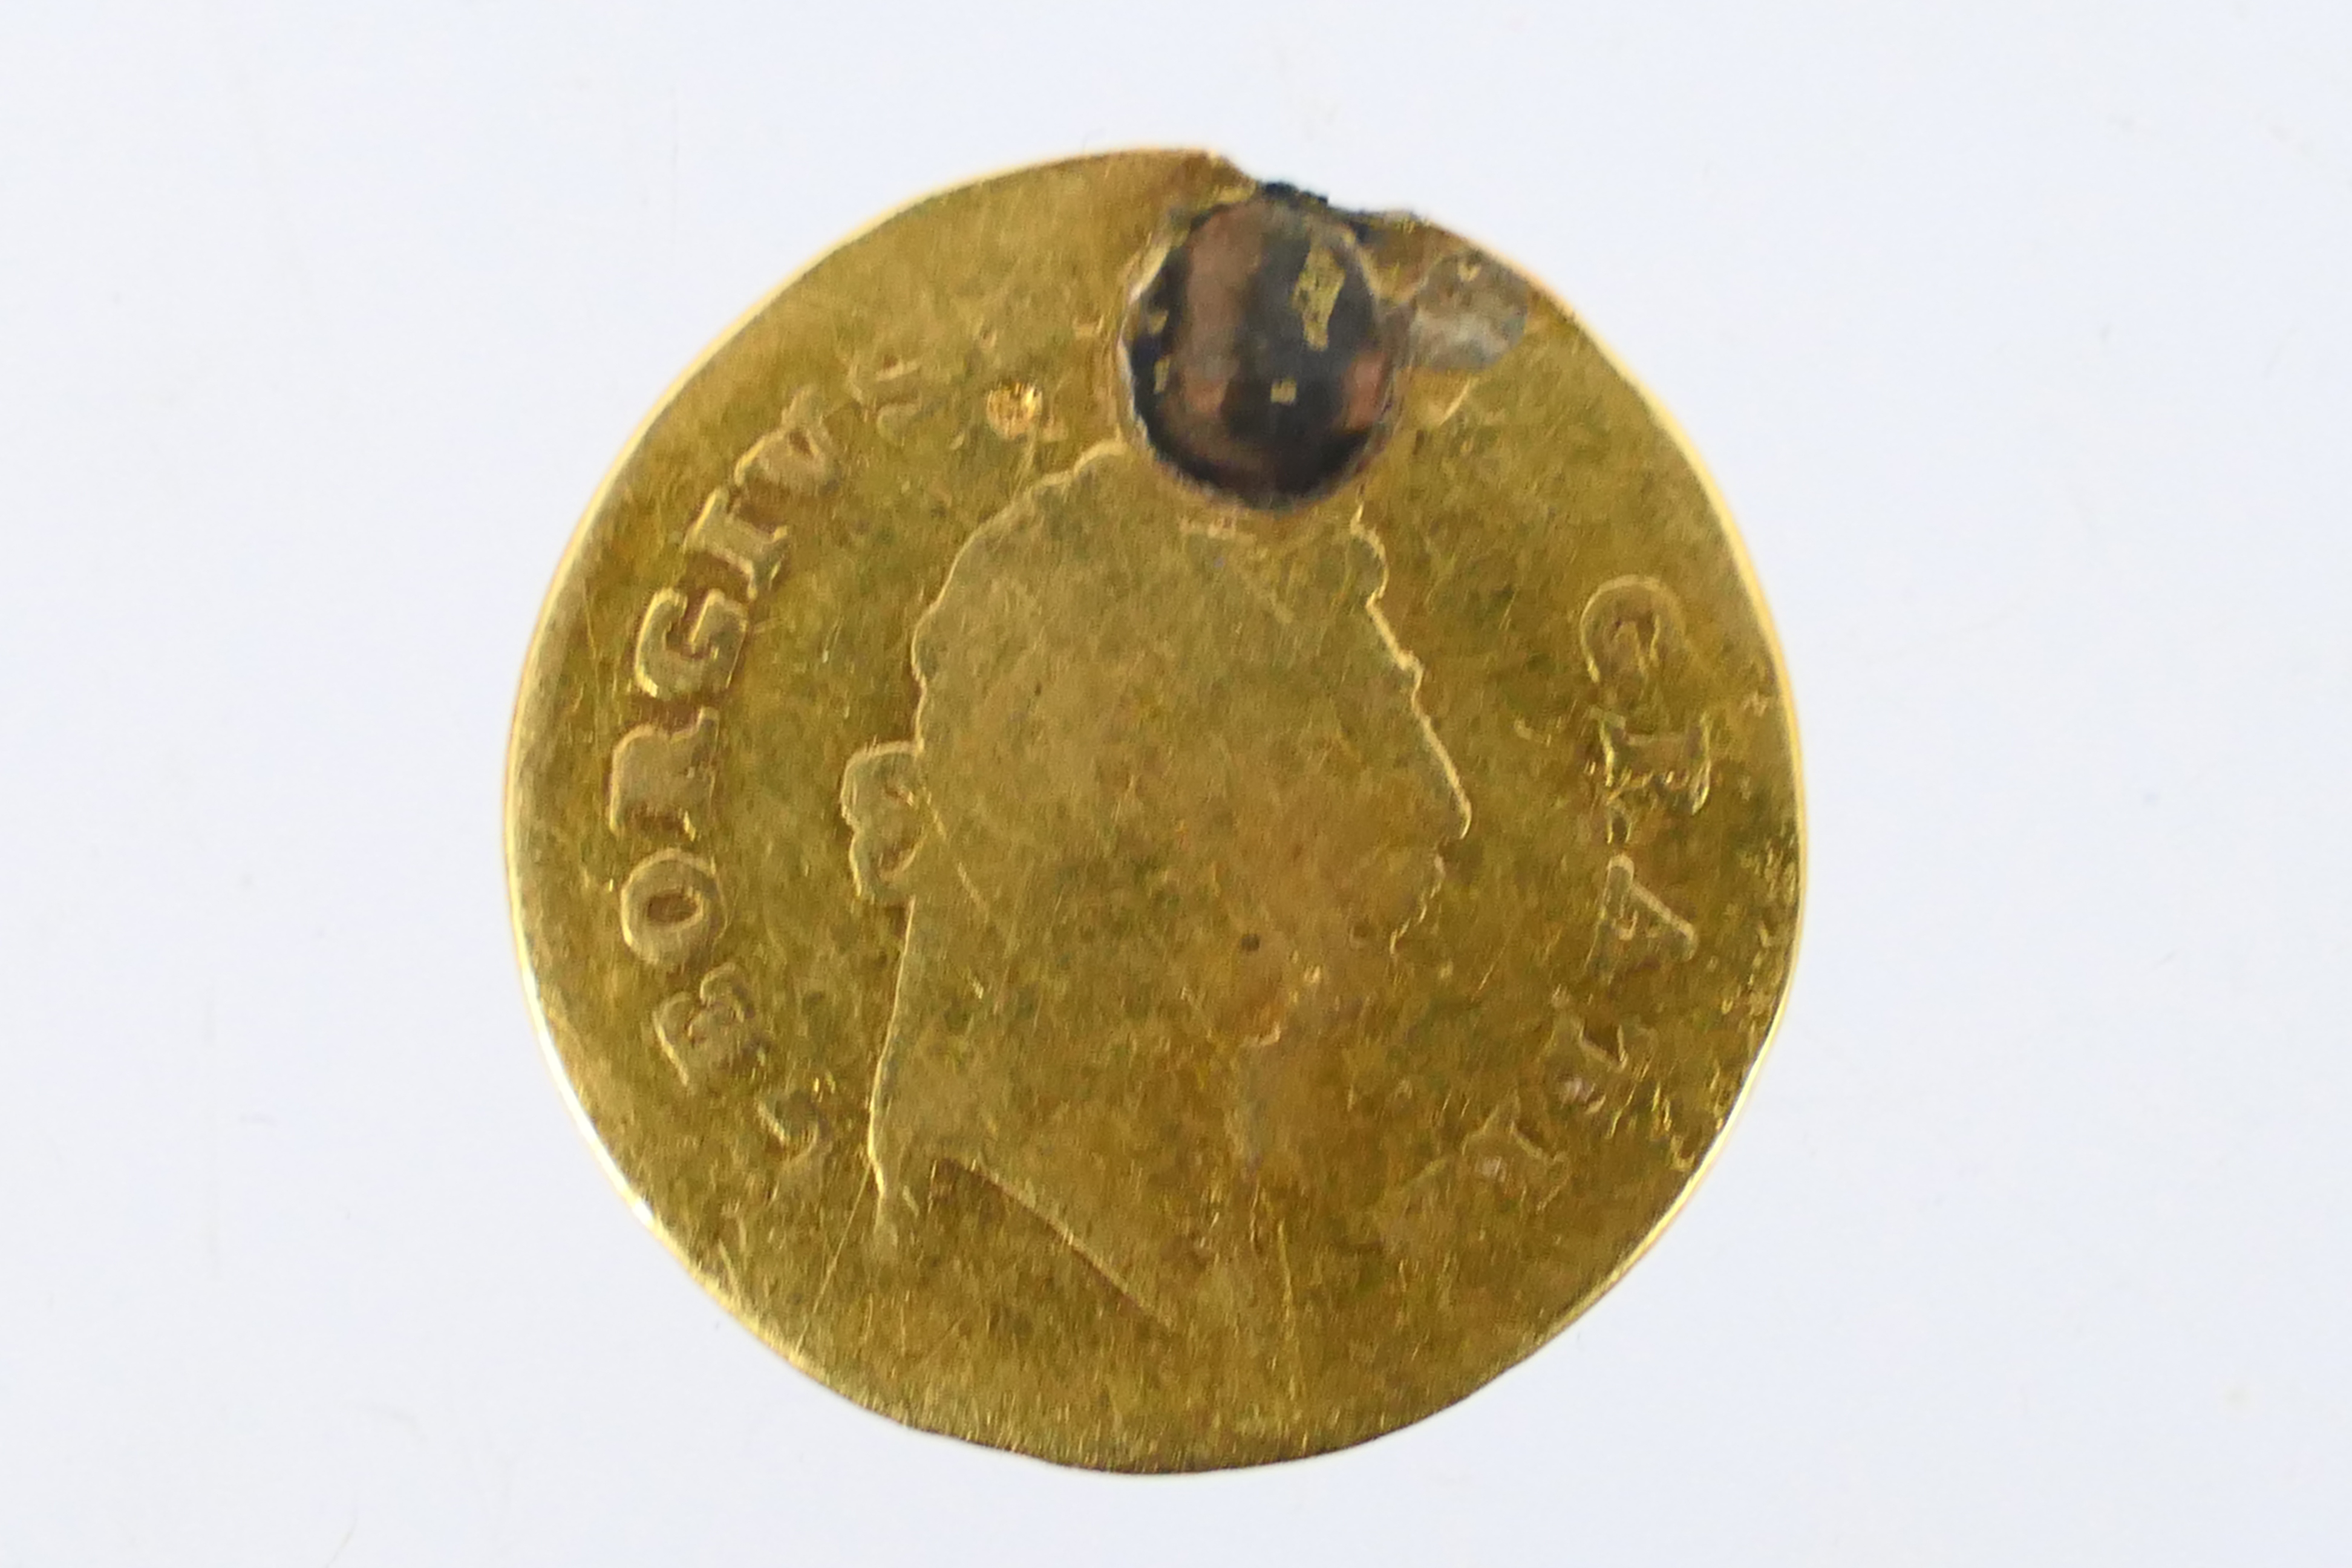 George III - Gold Third Guinea, 1797, 2.6 grams.